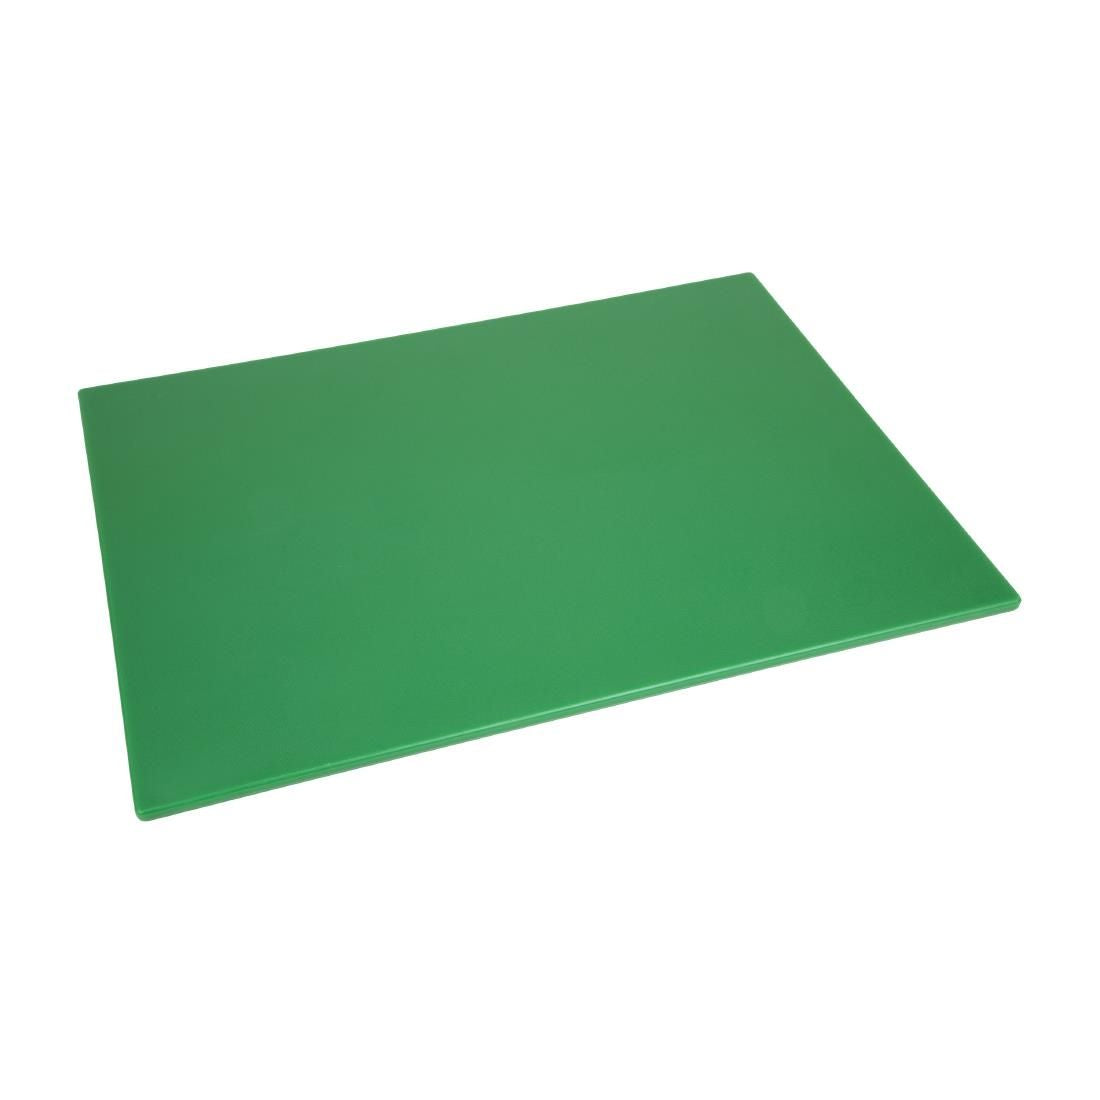 Hygiplas Low Density Green Chopping Board Large JD Catering Equipment Solutions Ltd